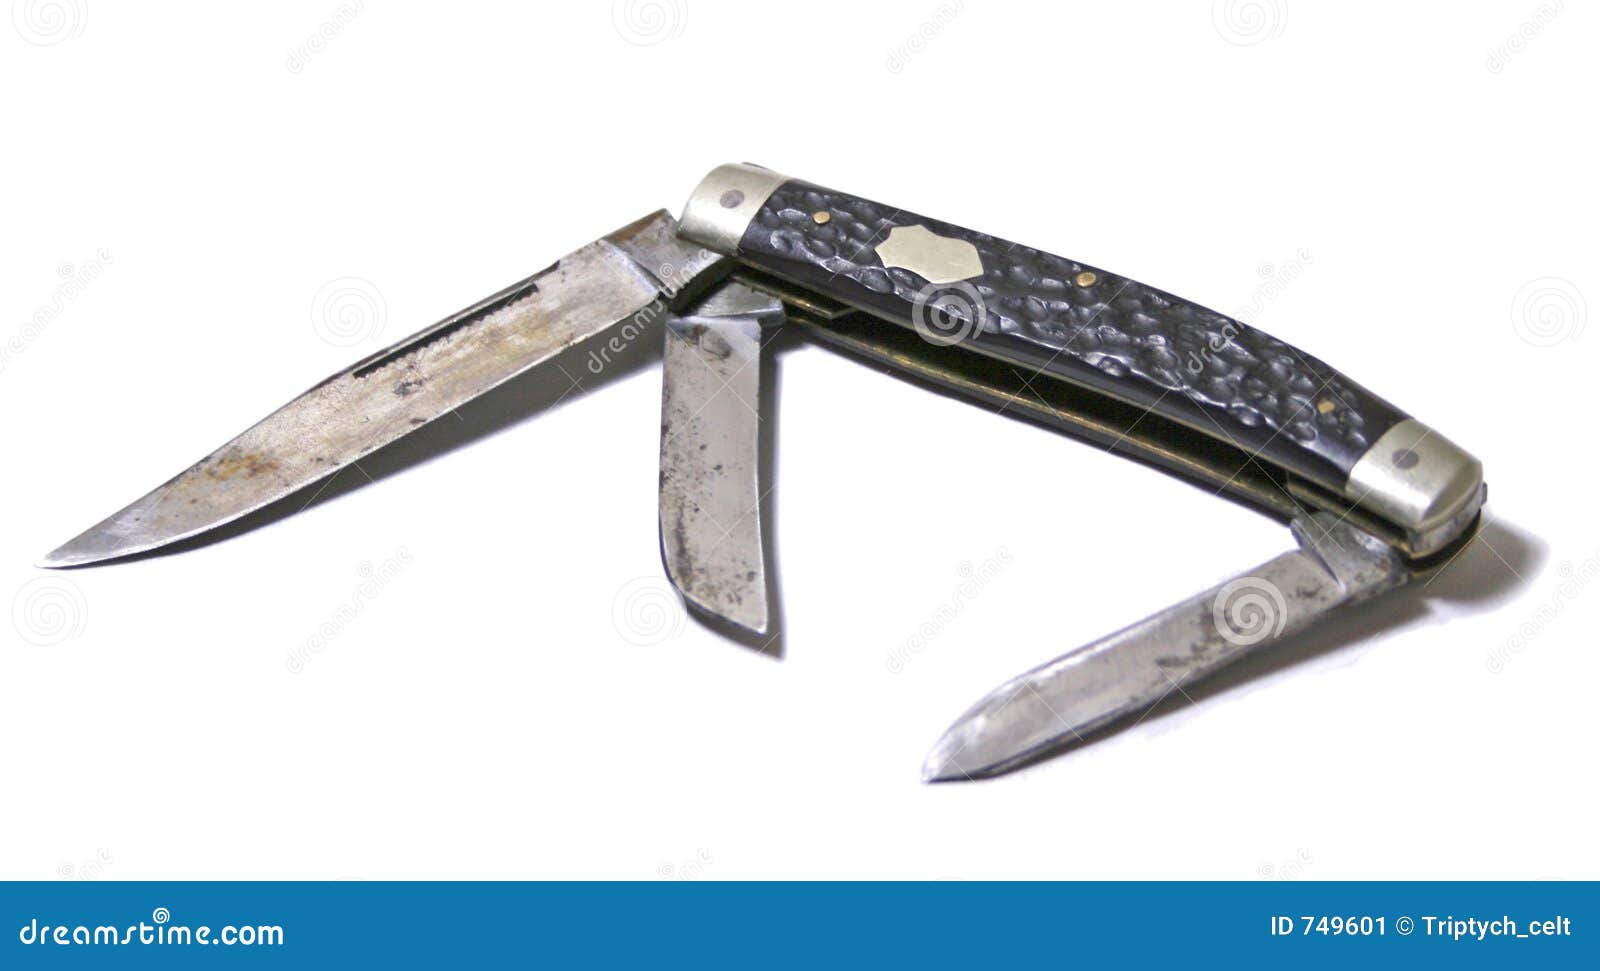 Antique German Penknife stock image. Image of original - 749601